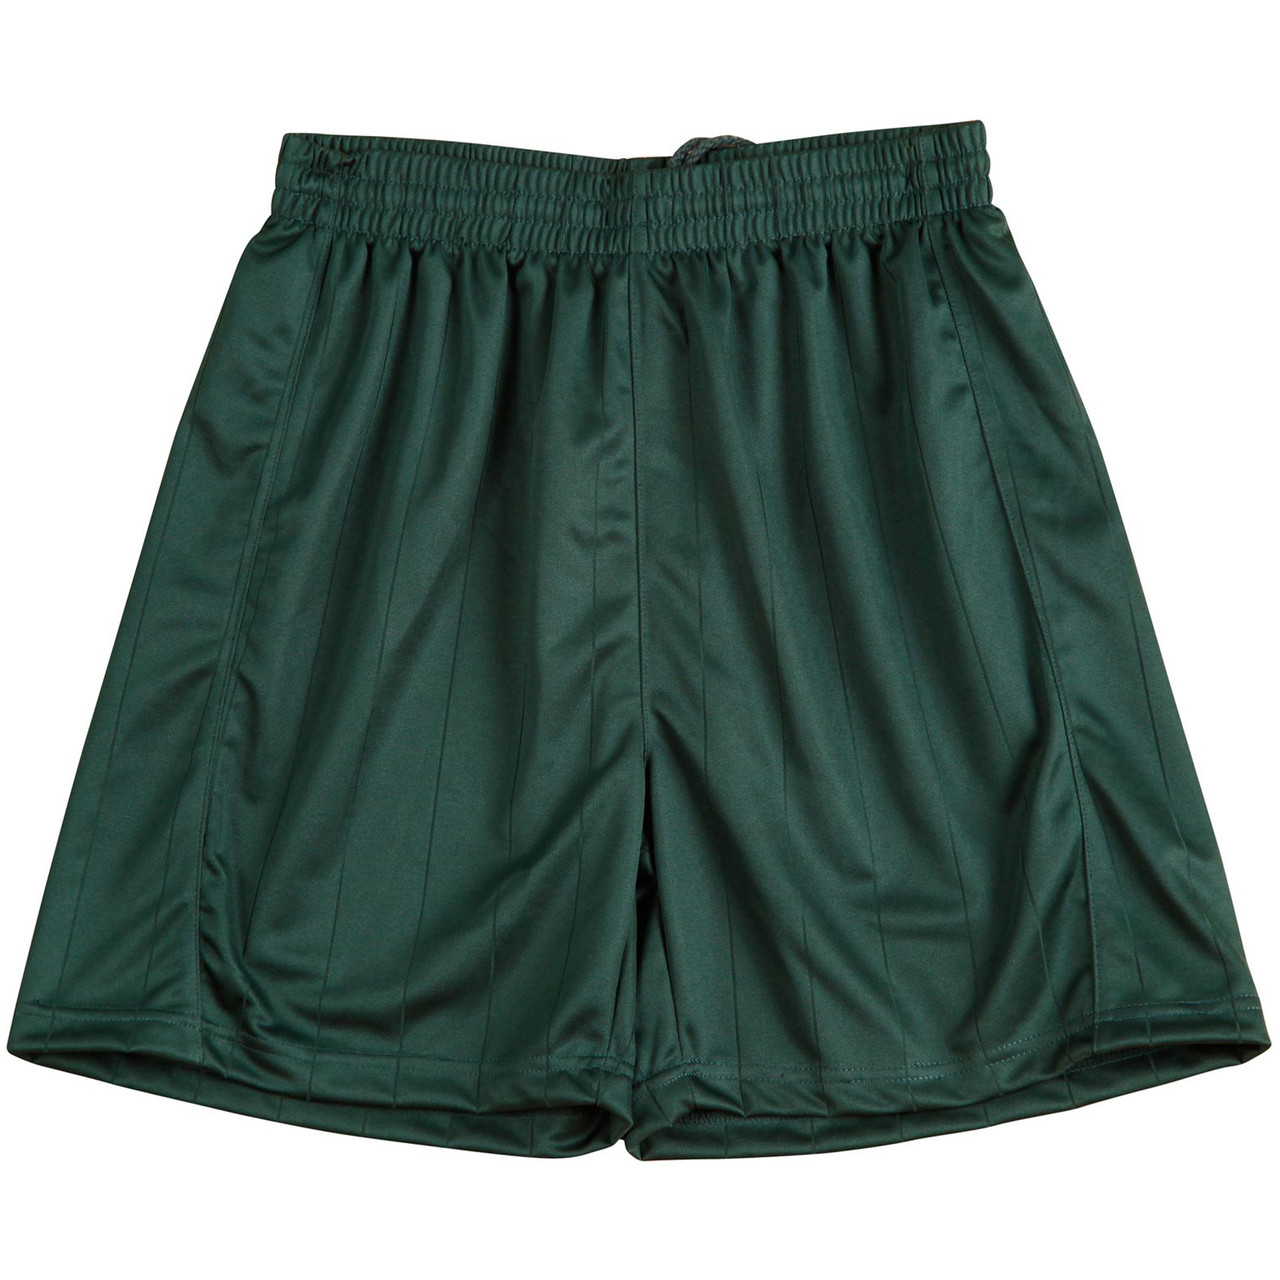 Unisex Adult CoolDry Soccer Shorts | Shop Team Uniforms Online